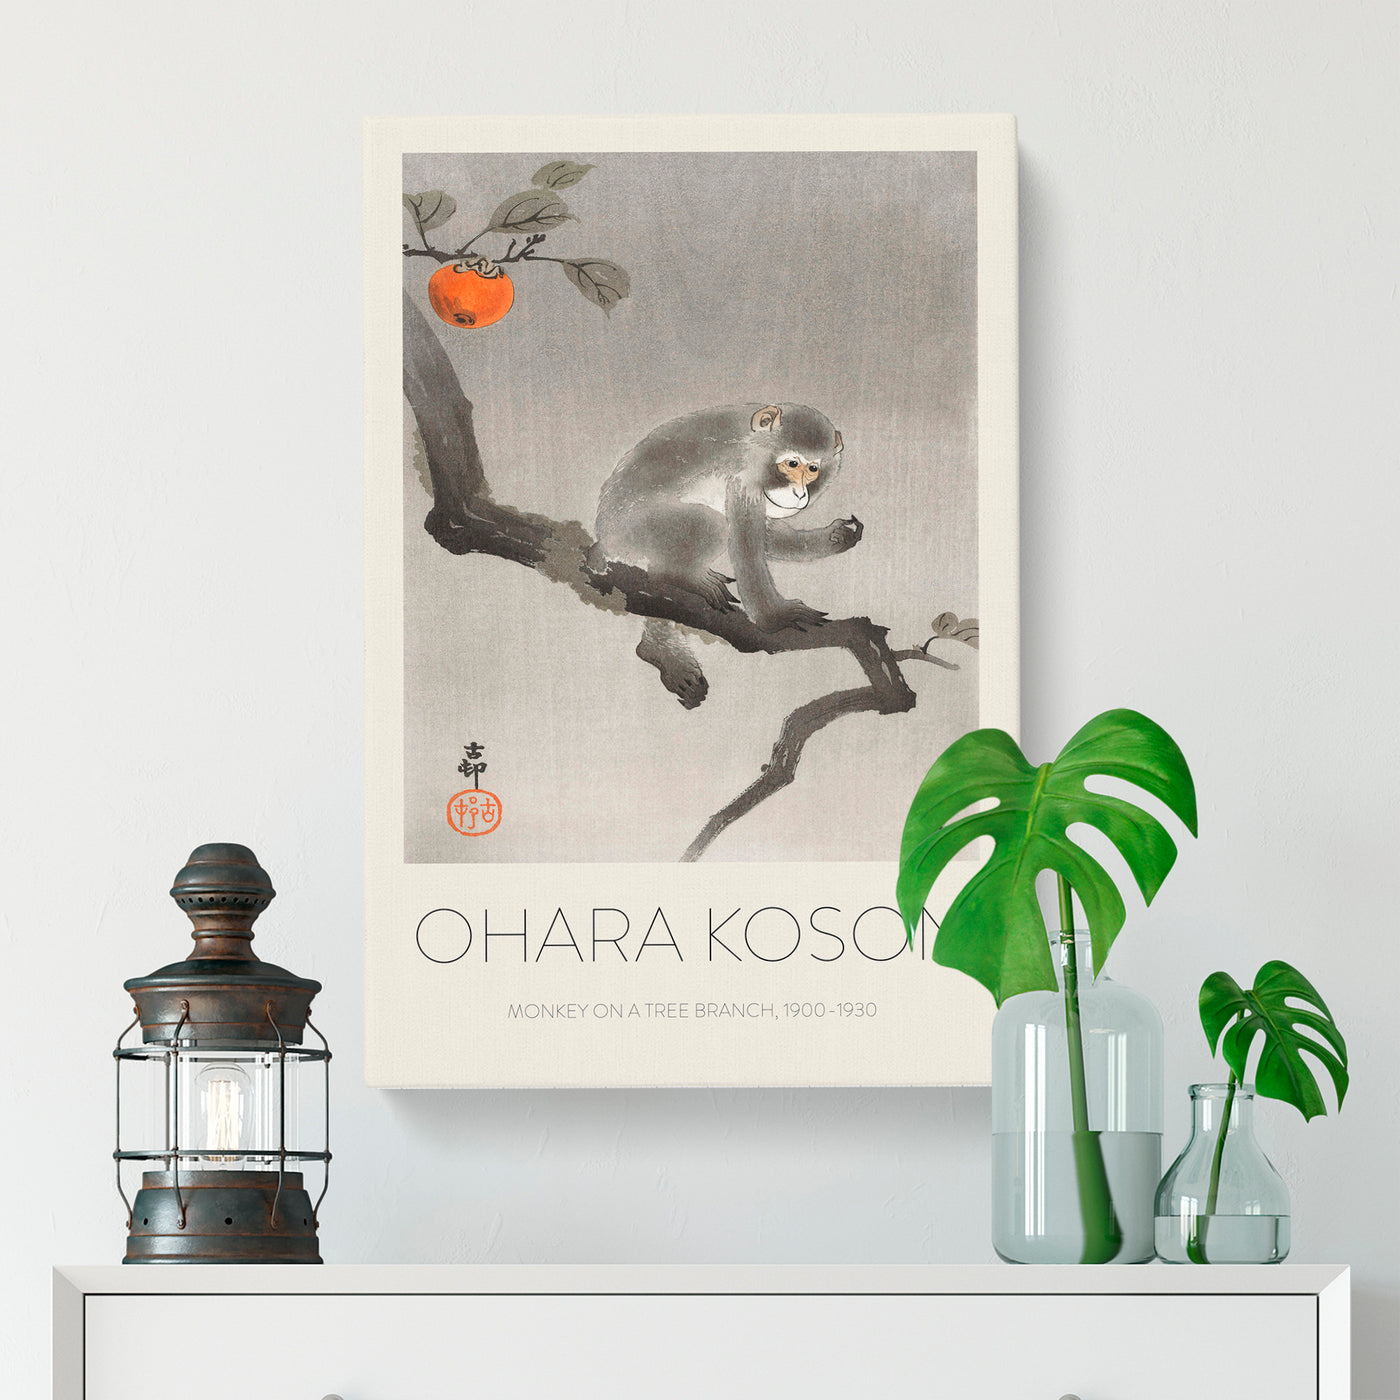 Monkey Upon An Orange Tree Print By Ohara Koson